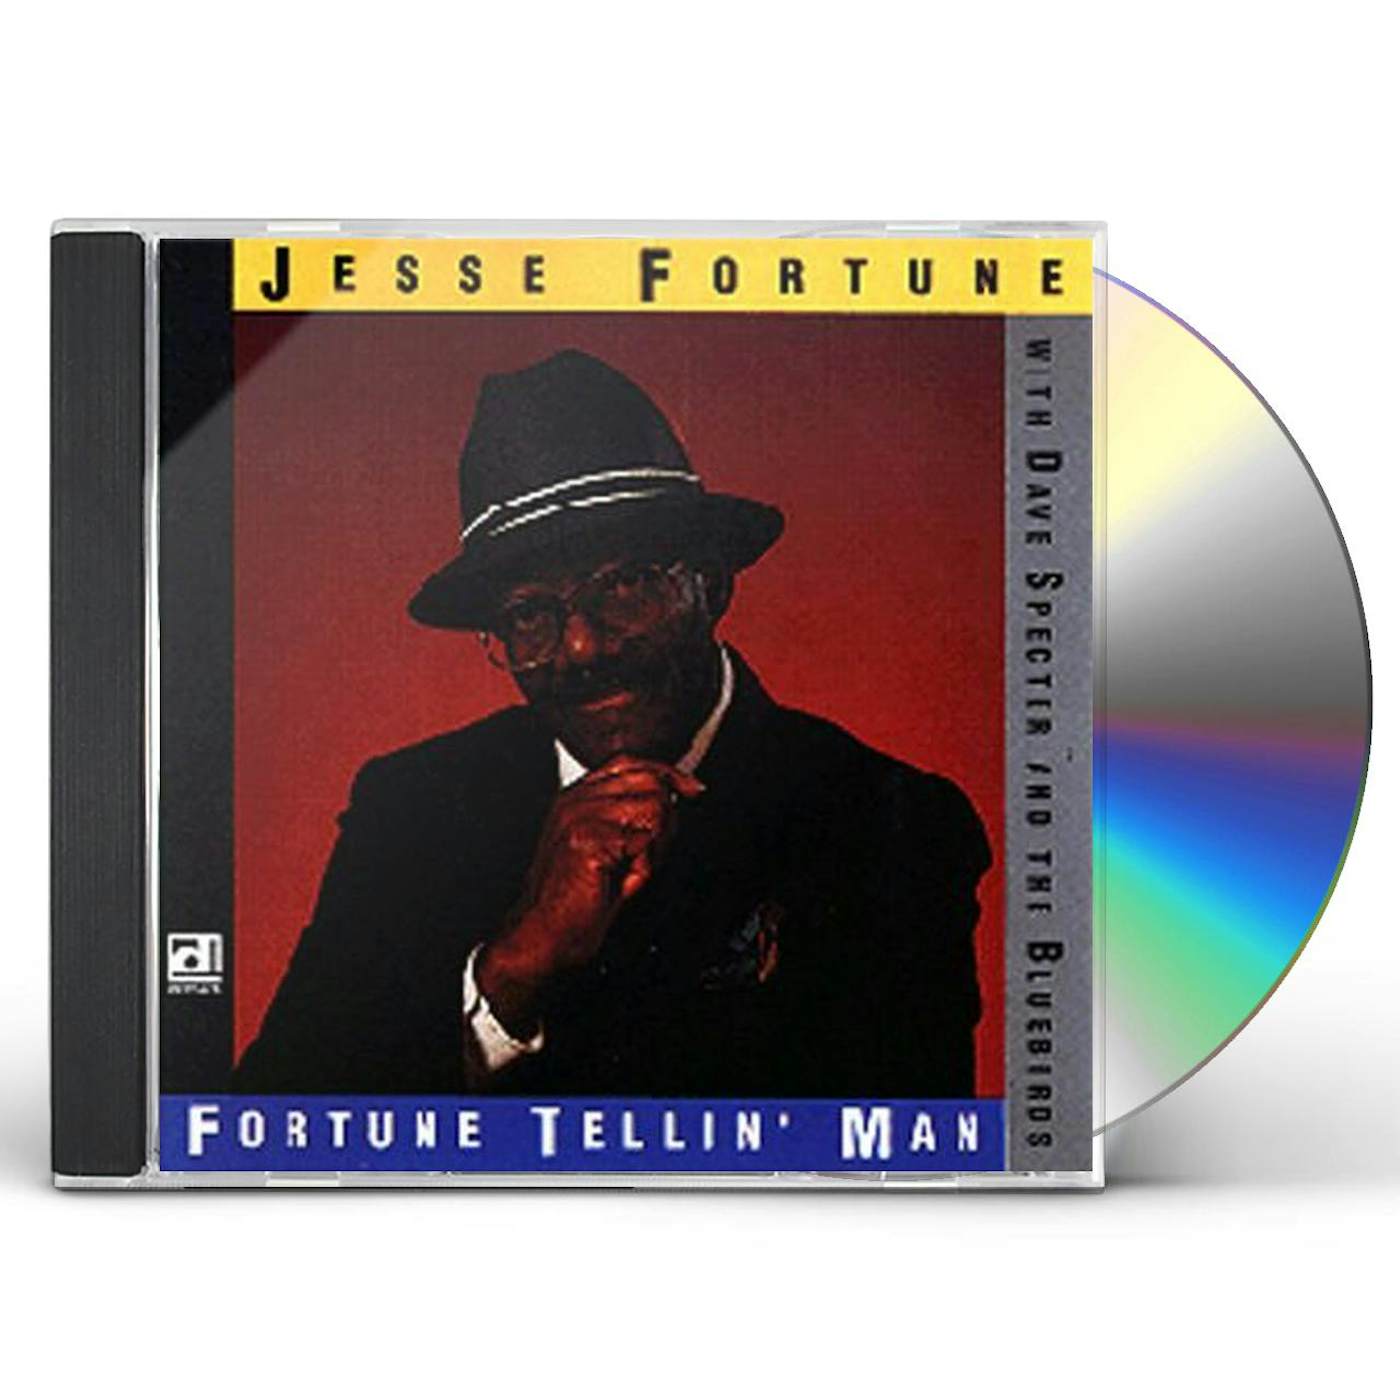 Jesse Fortune FORTUNE TELLIN' MAN CD